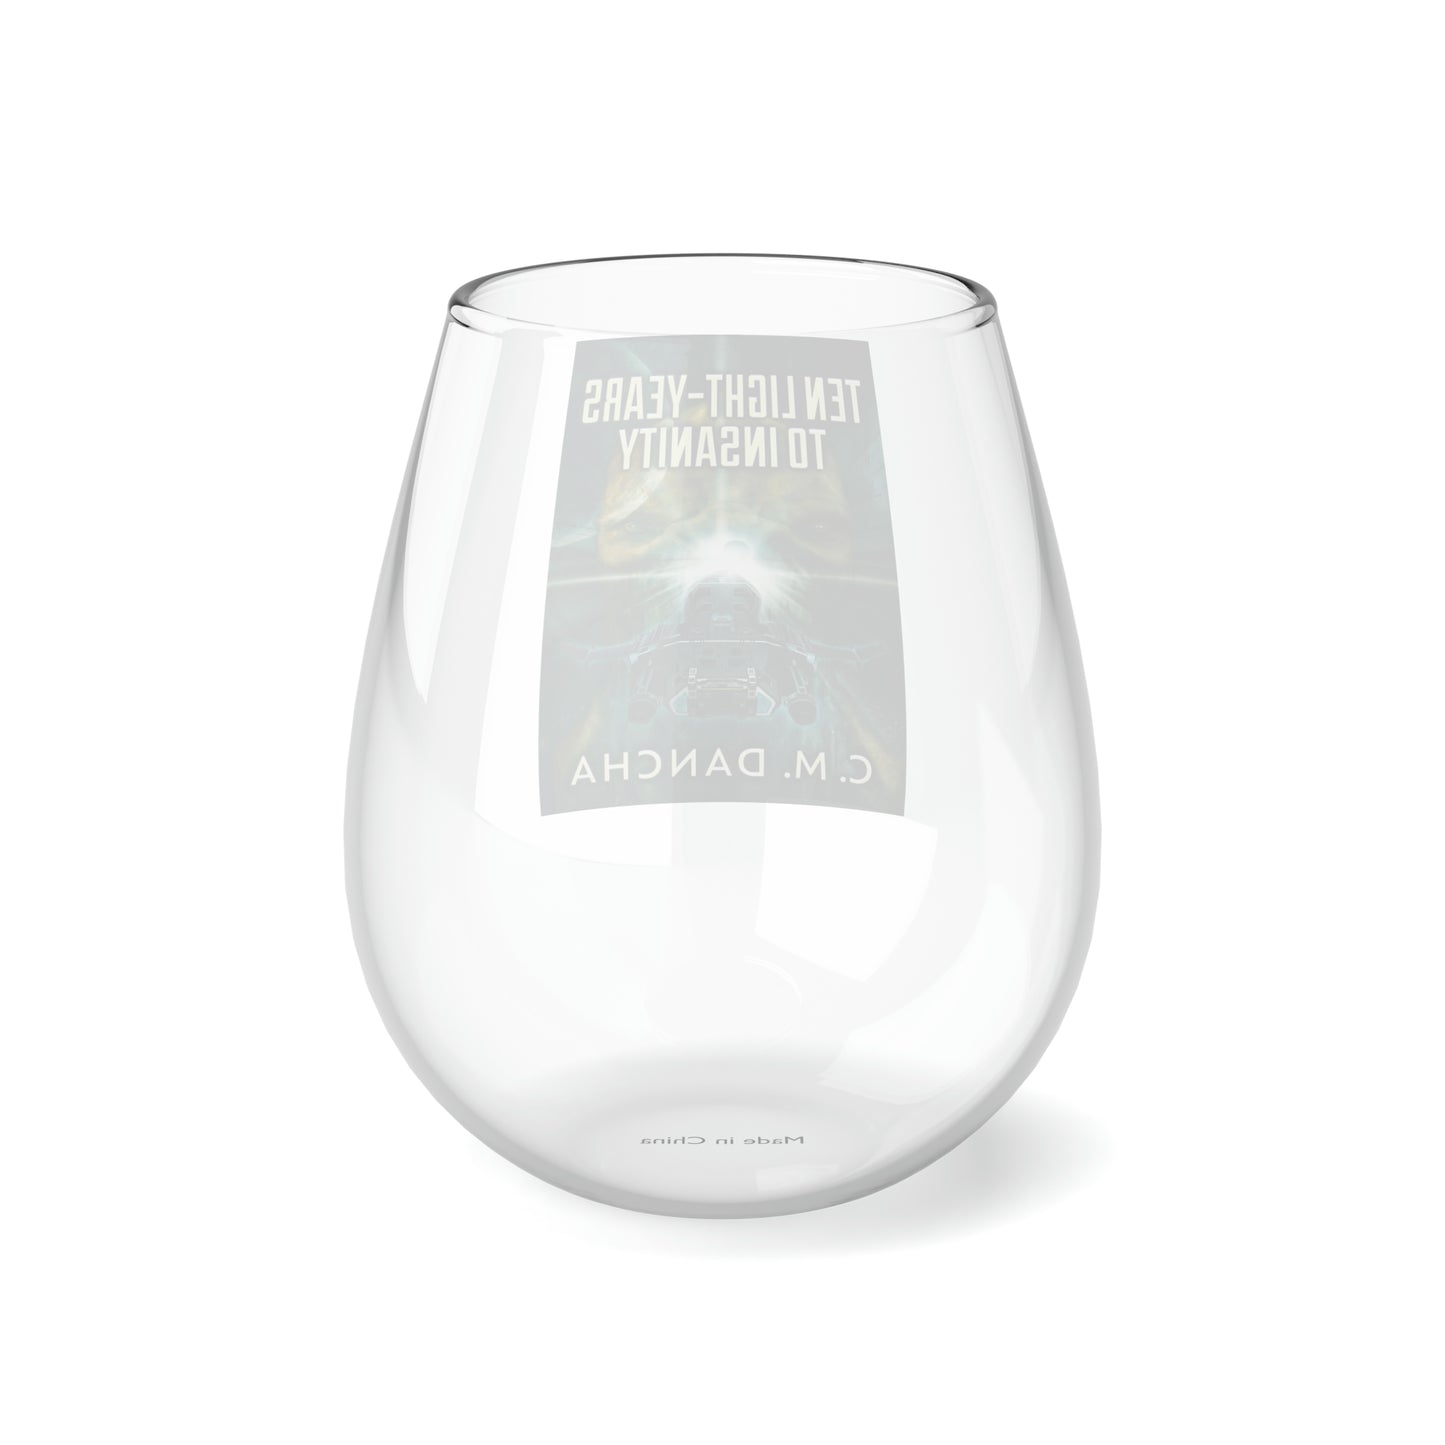 Ten Light-Years To Insanity - Stemless Wine Glass, 11.75oz